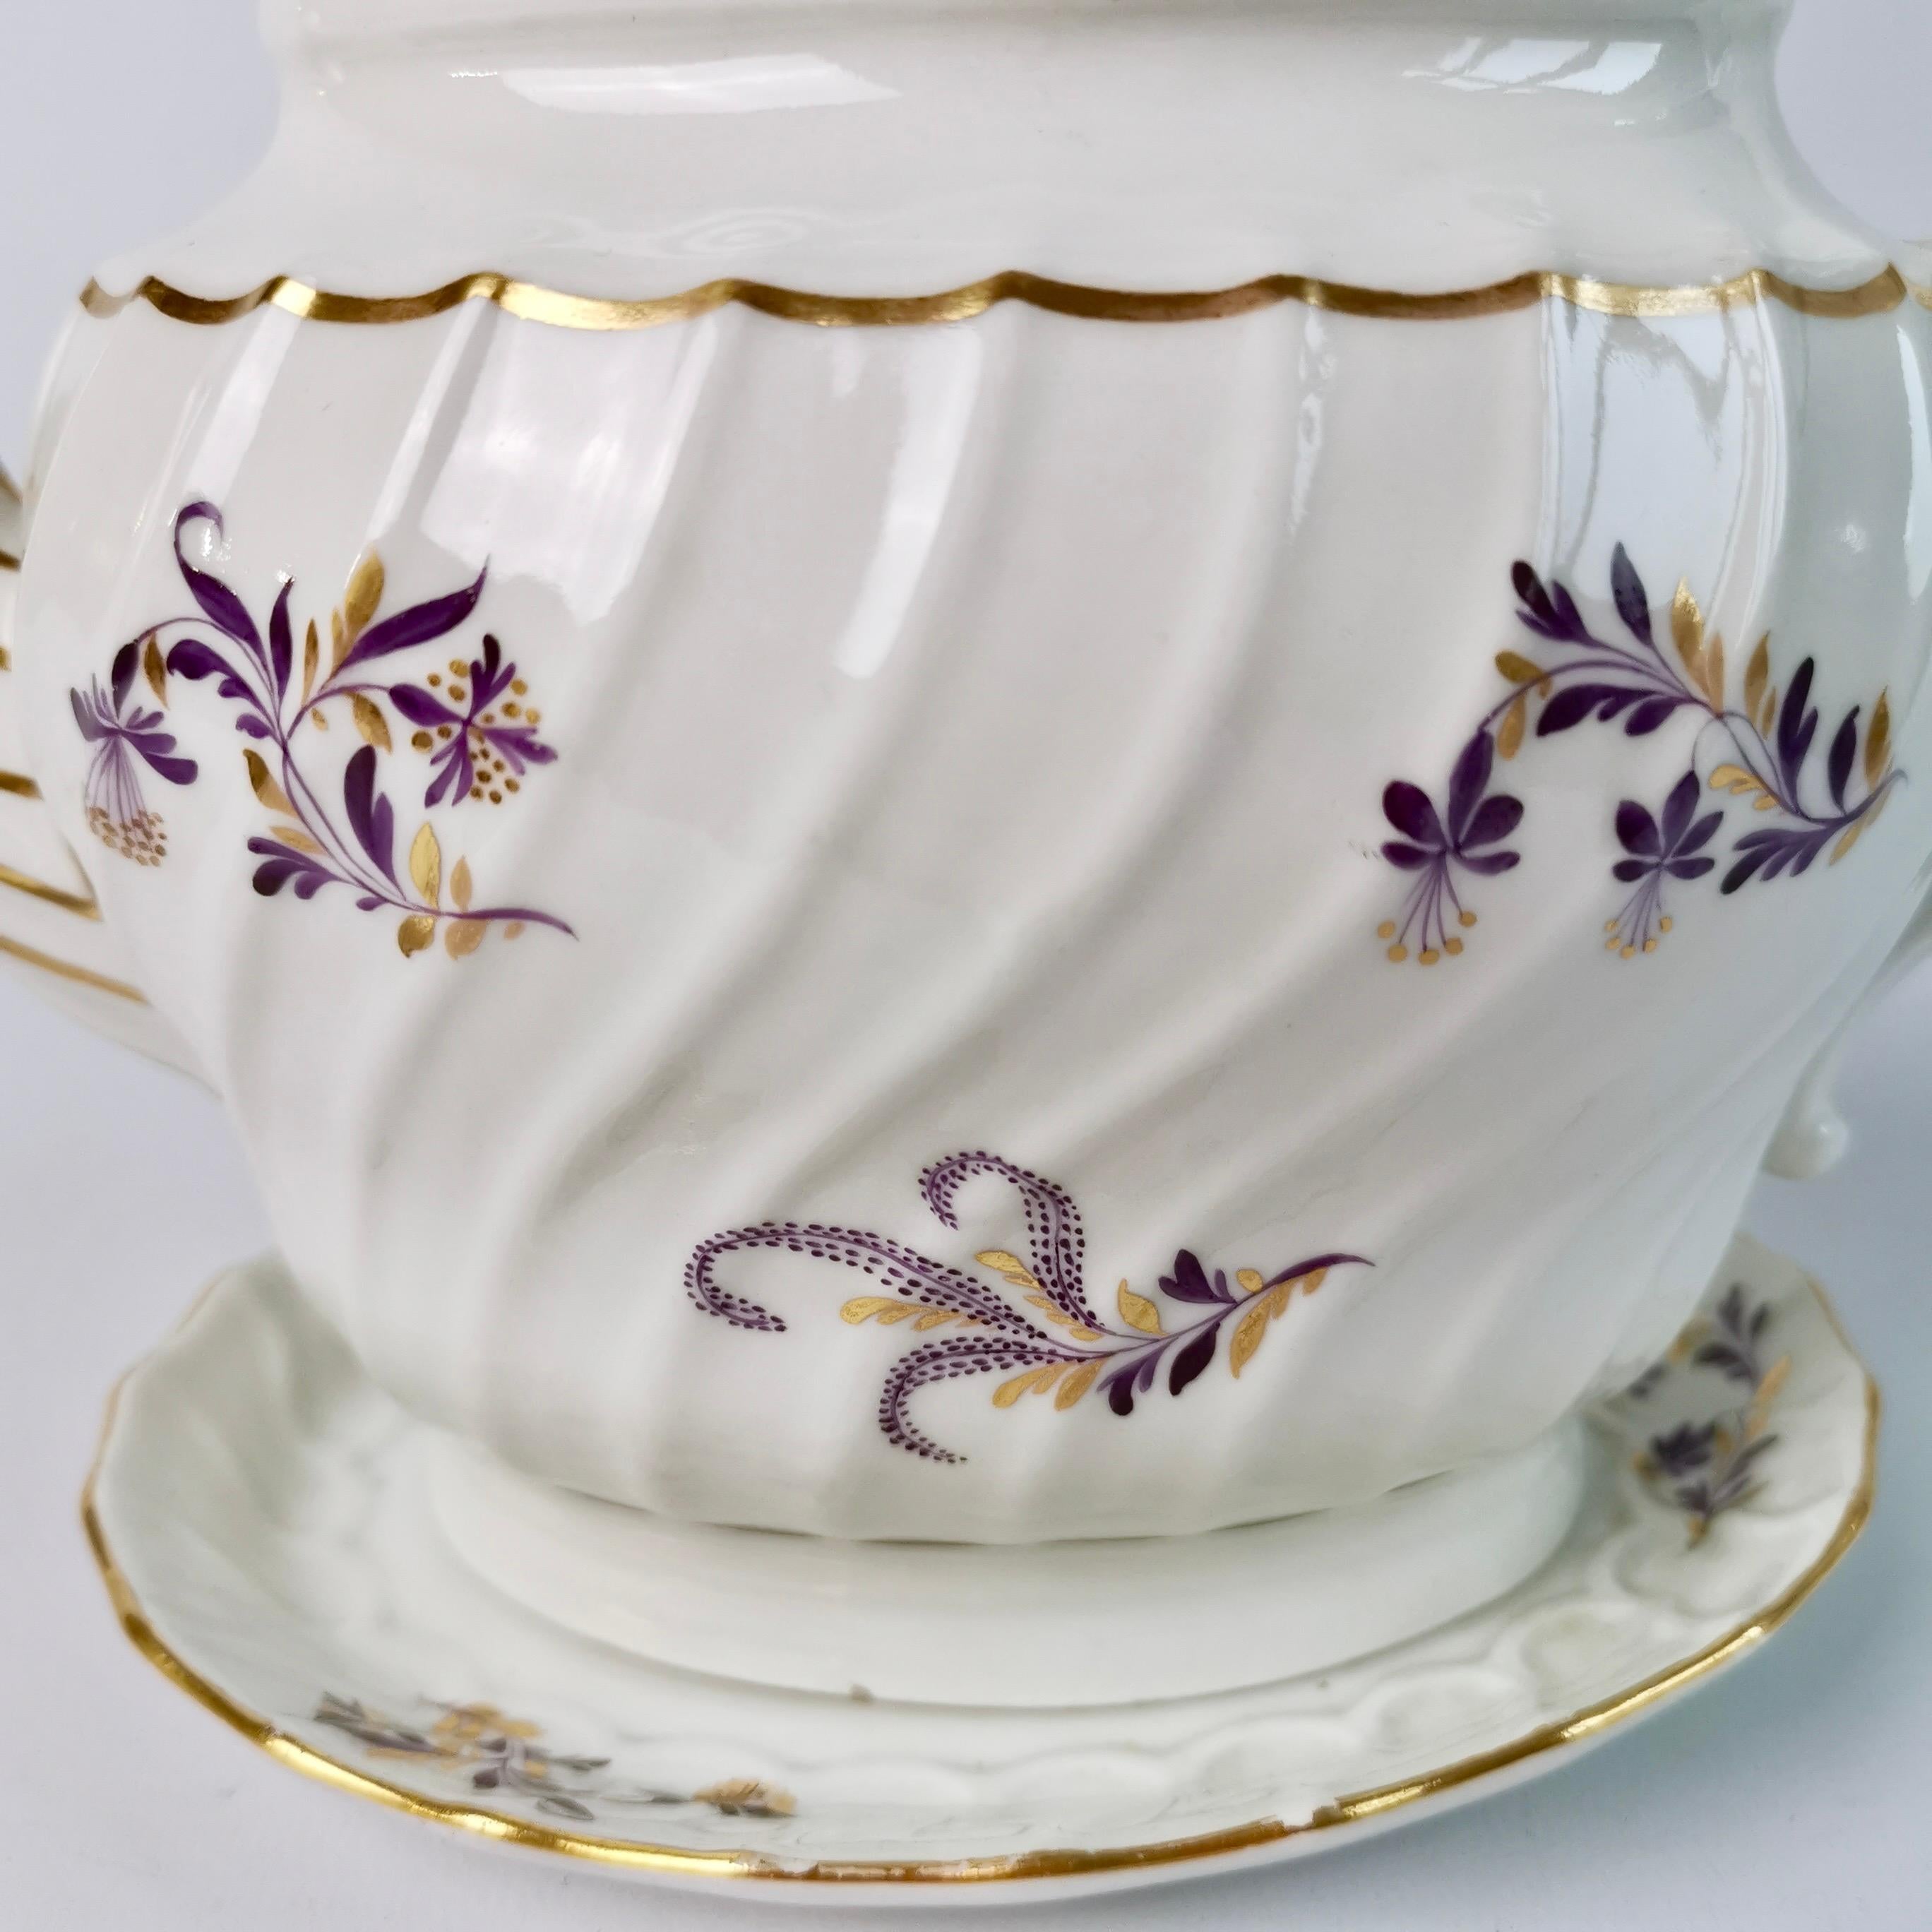 Late 18th Century Flight & Barr Teapot on Stand, White with Purple Flower Sprays, Georgian ca 1792